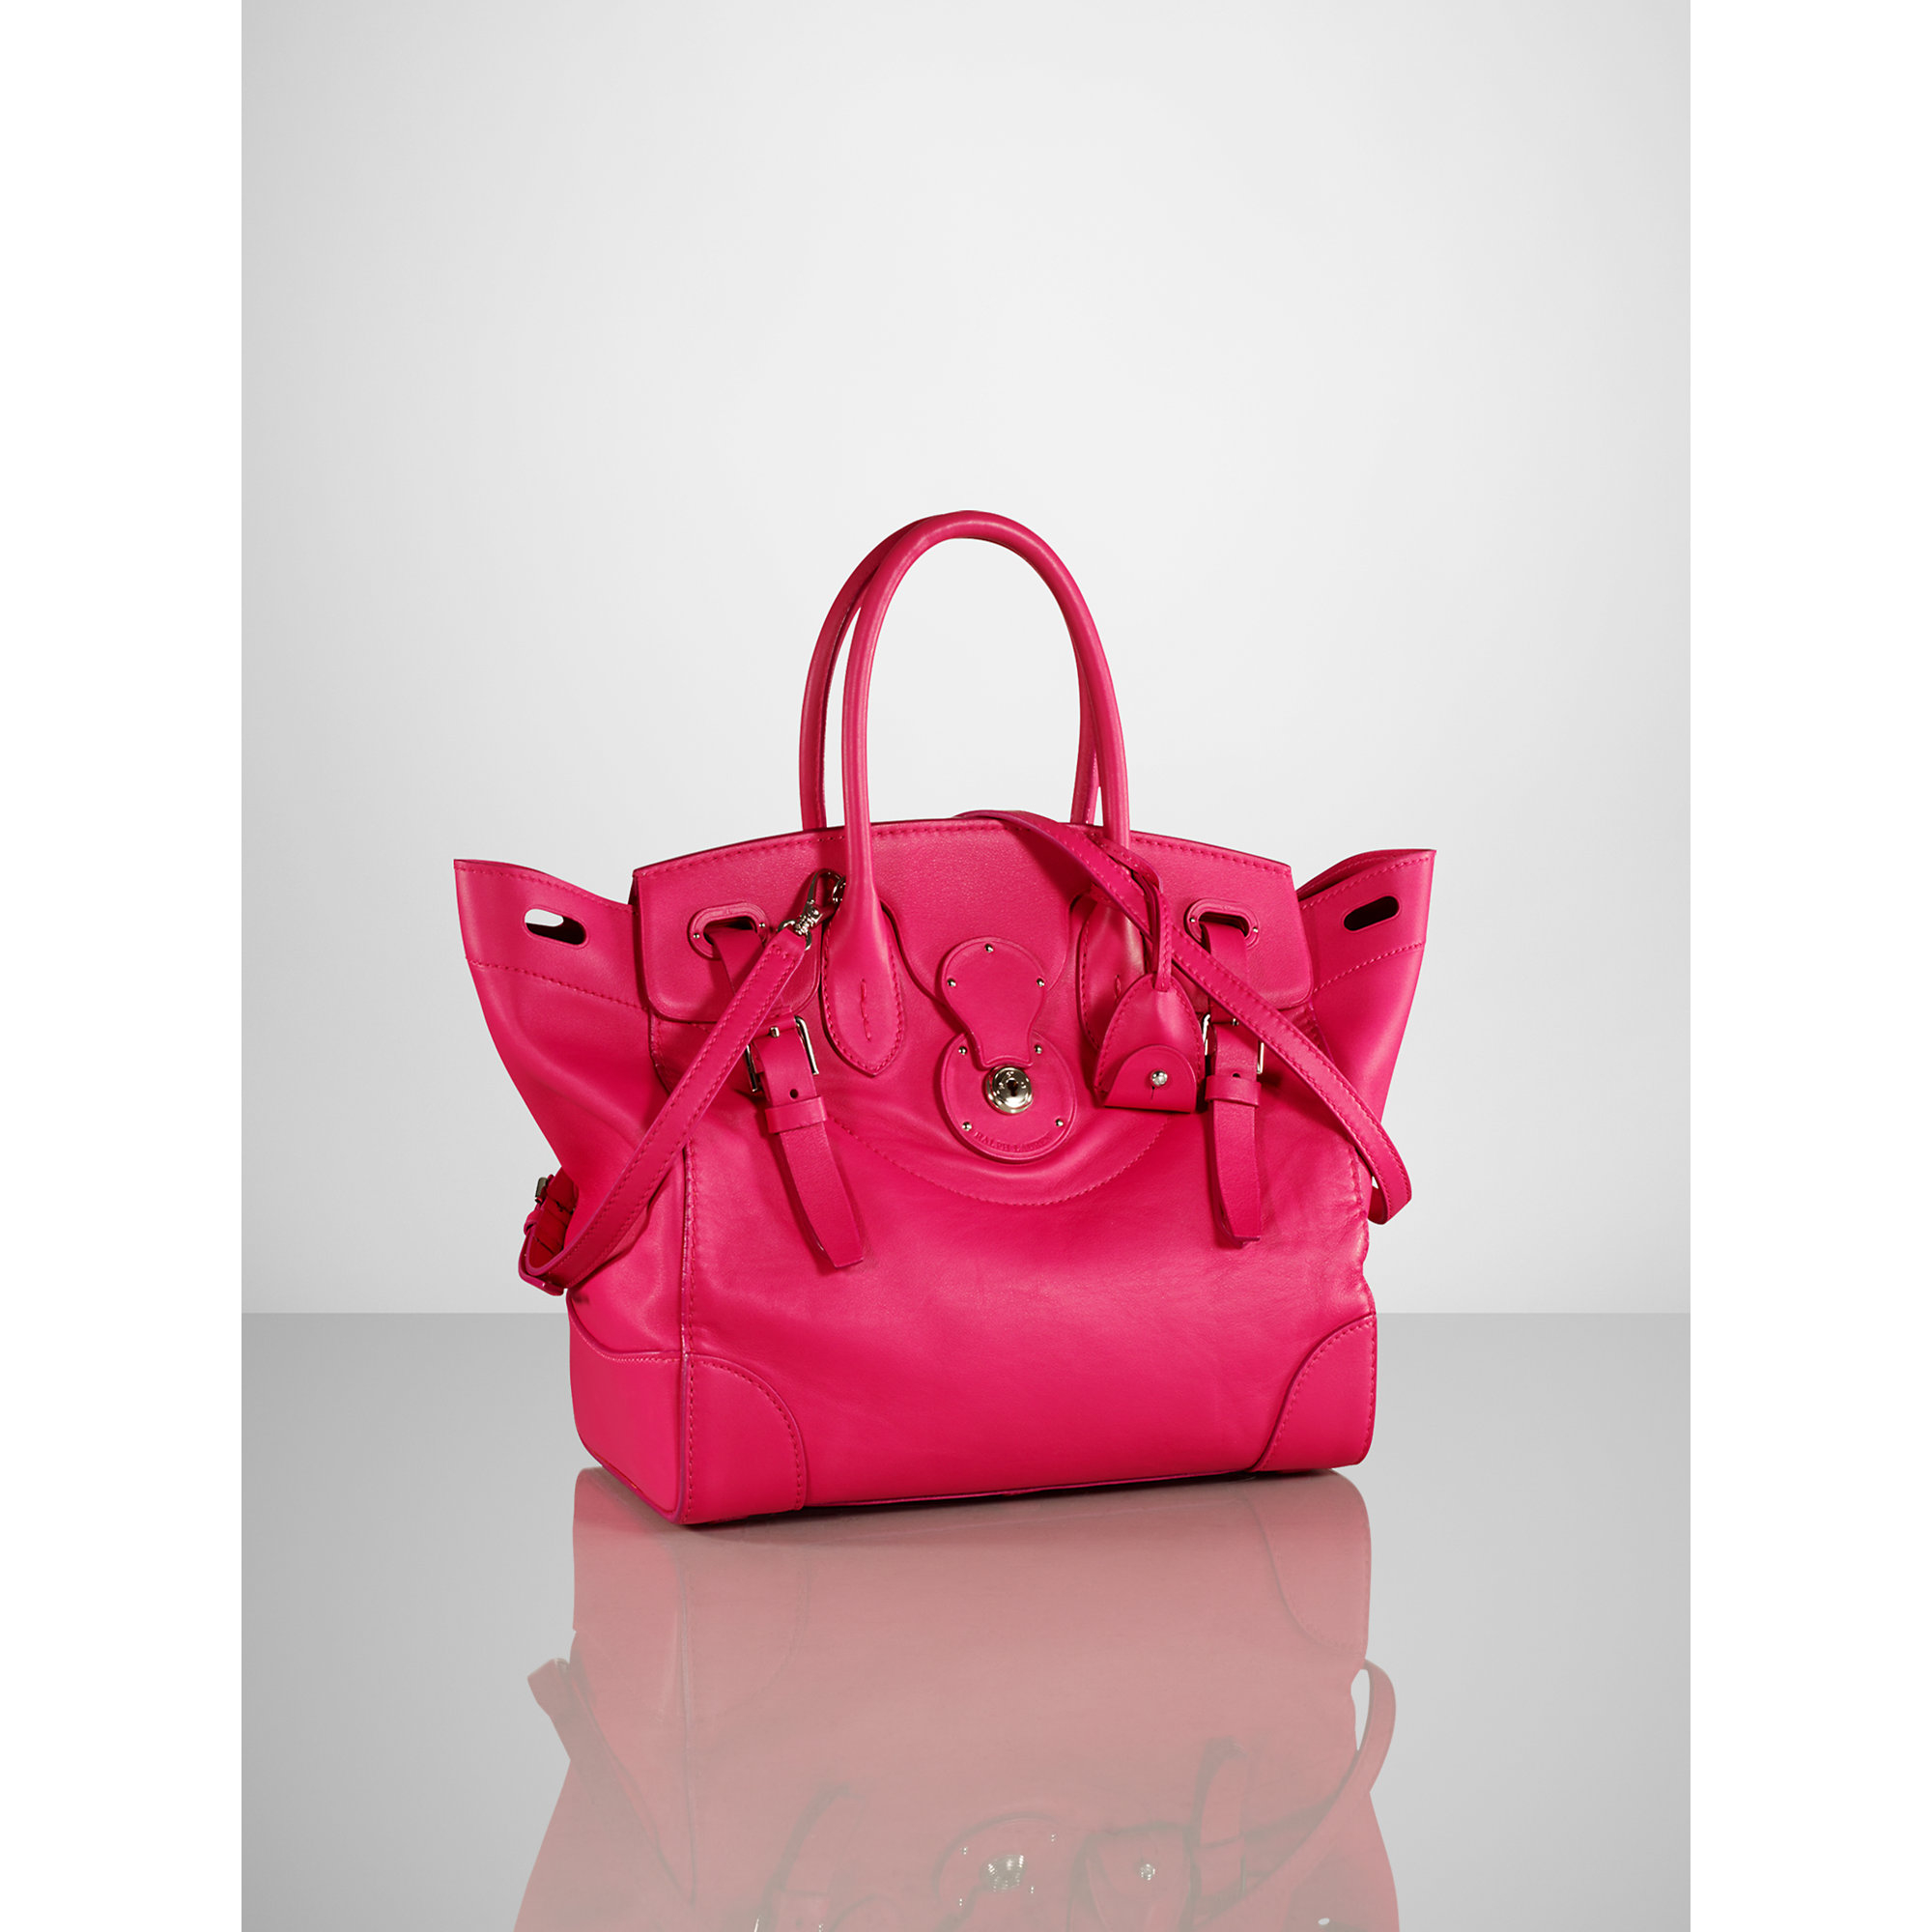 Lyst - Ralph Lauren Soft Ricky Bag in Pink